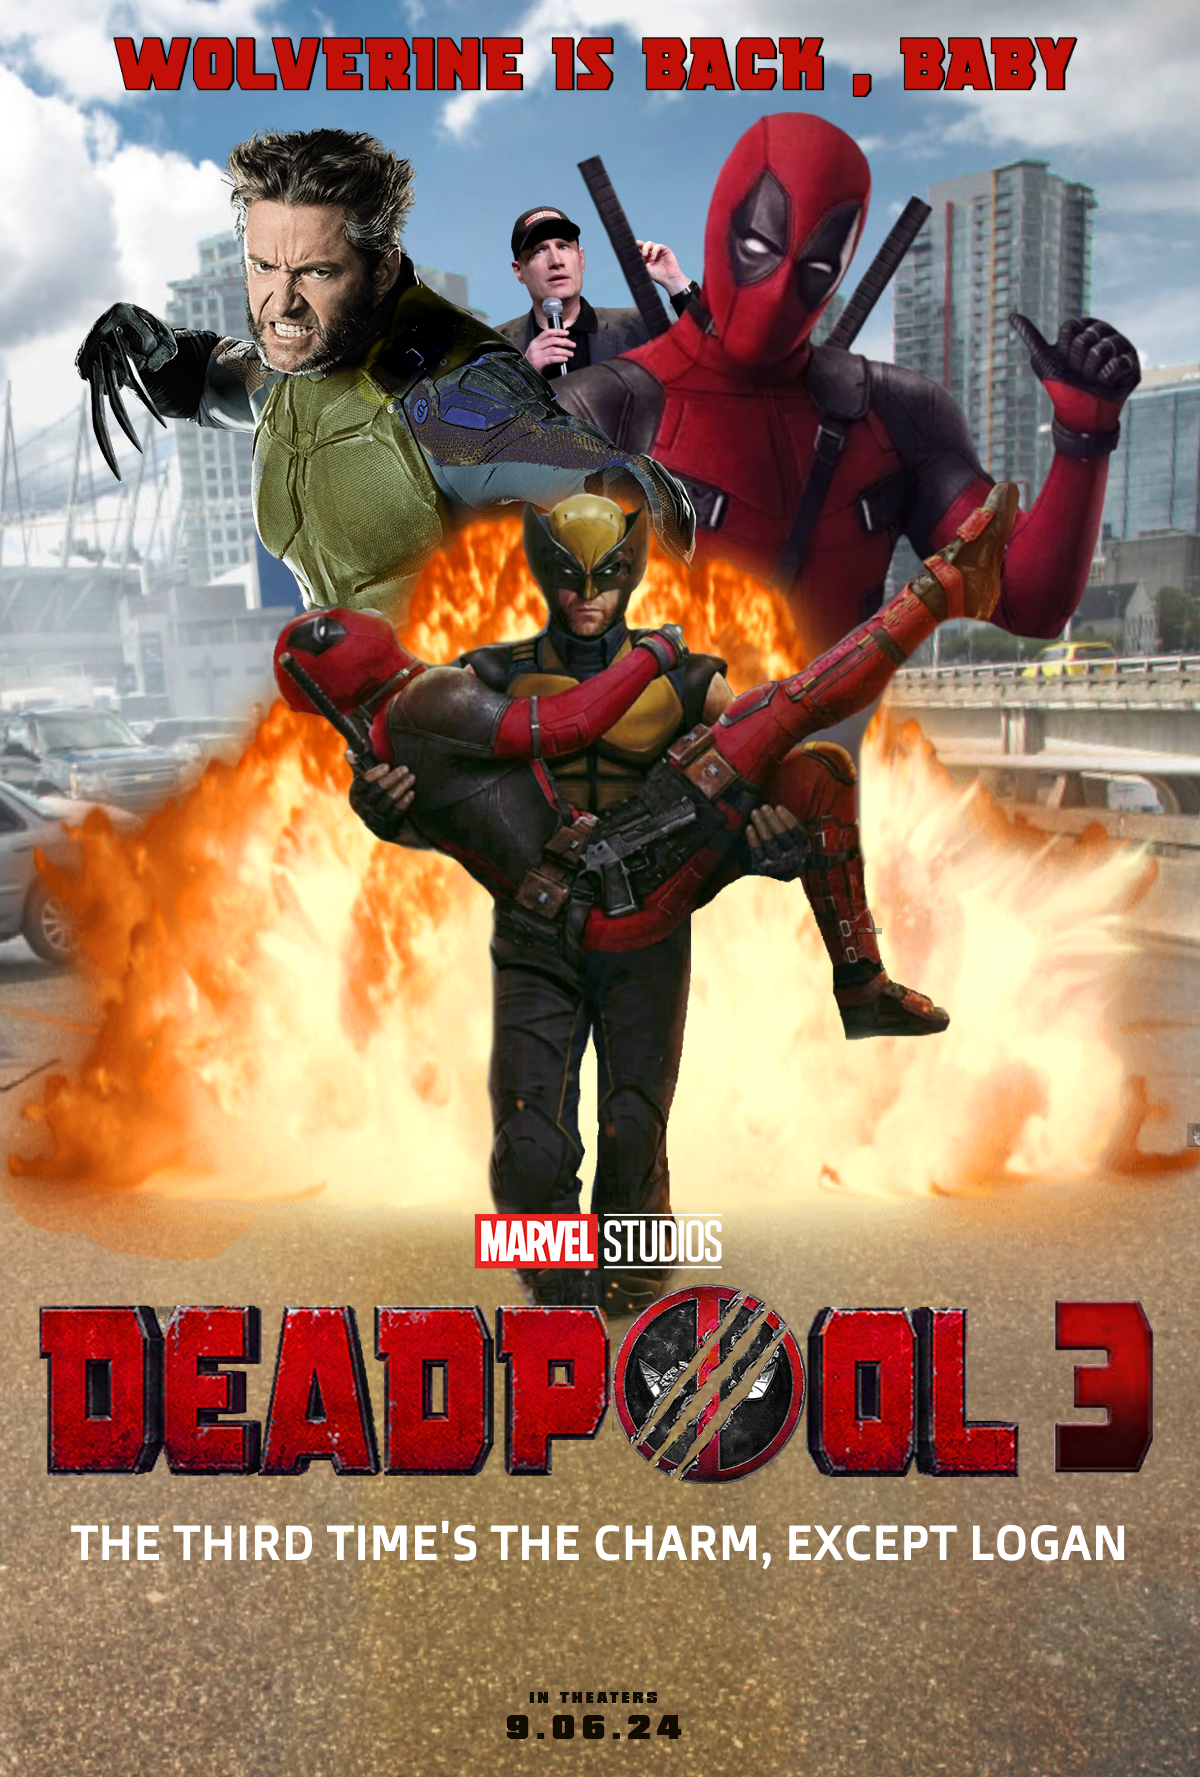 ArtStation - deadpool 3 poster